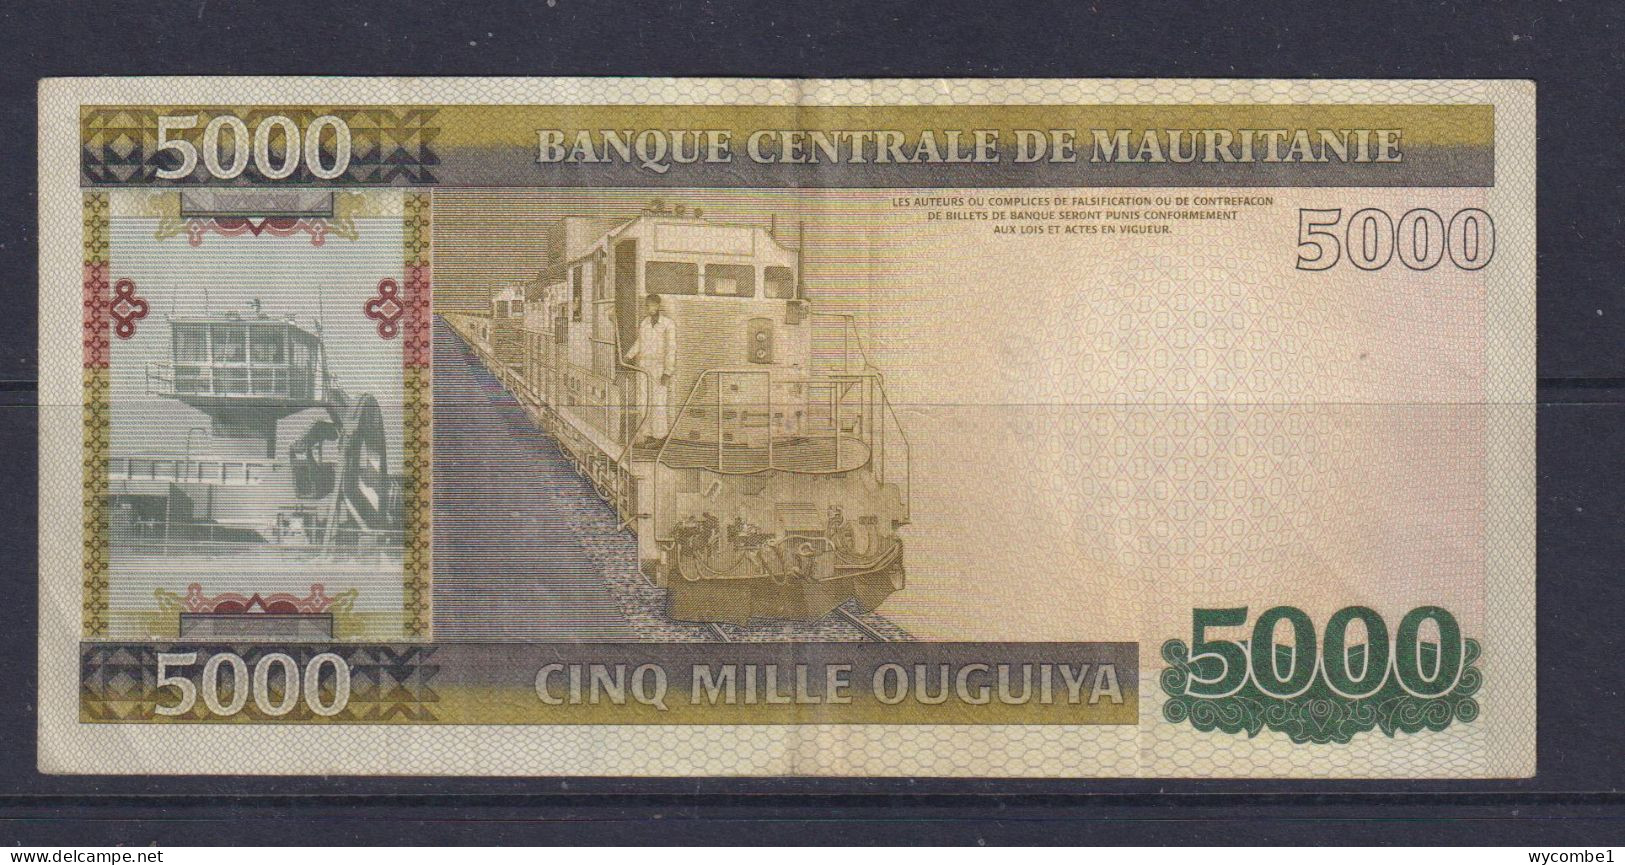 MAURITANIA - 2011 5000 Ouguiya Circulated Banknote - Mauritanien